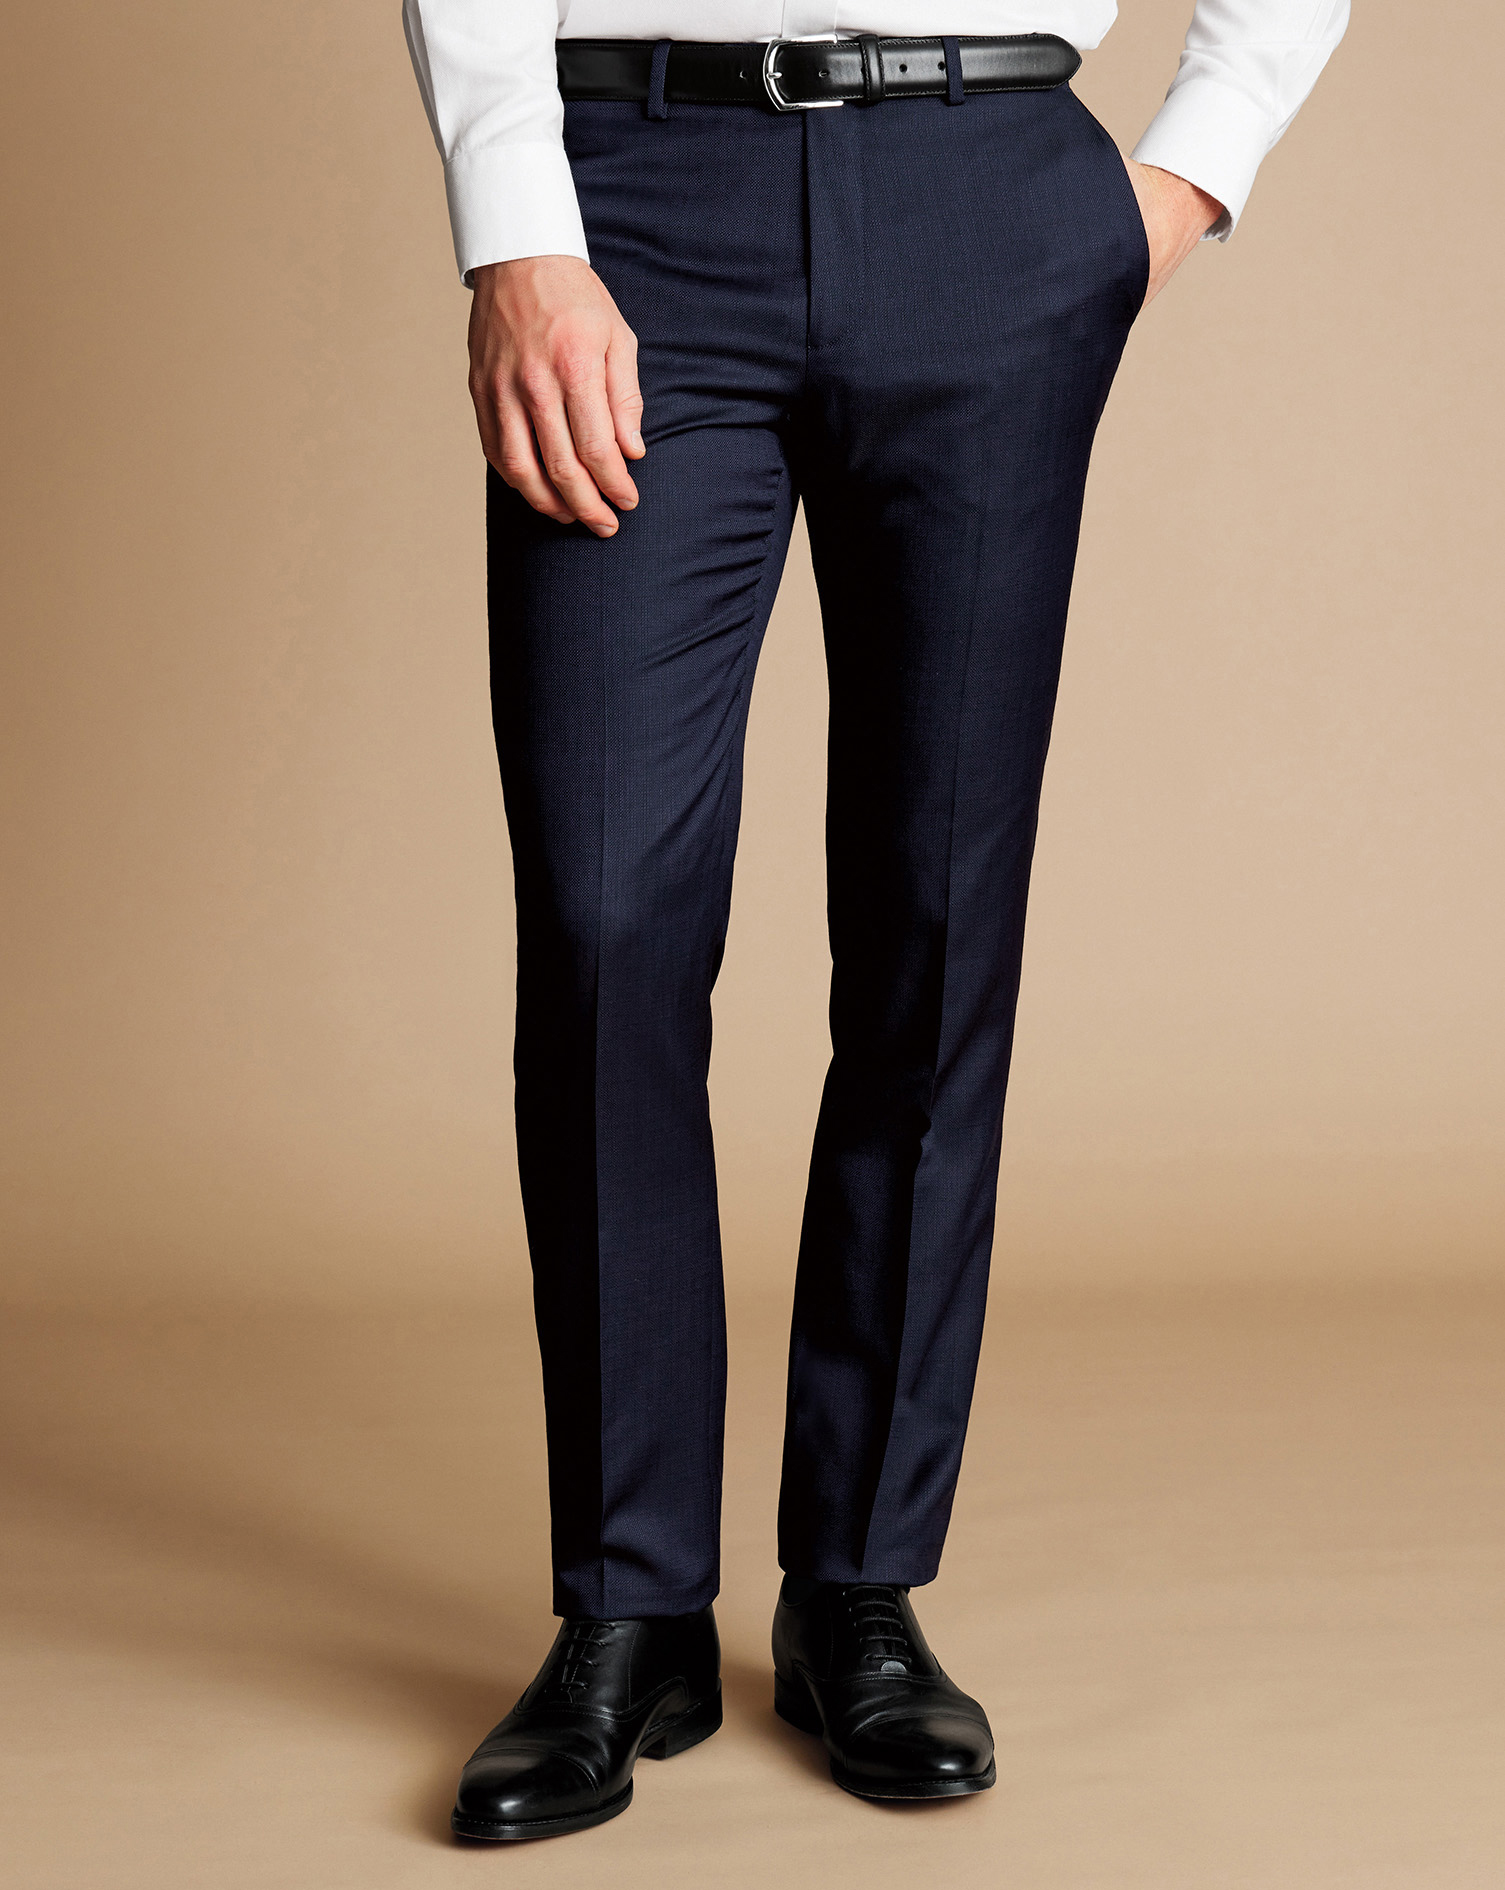 Men's Charles Tyrwhitt Italian Luxury Suit Trousers - Dark Navy Blue Size 38/32 Wool
